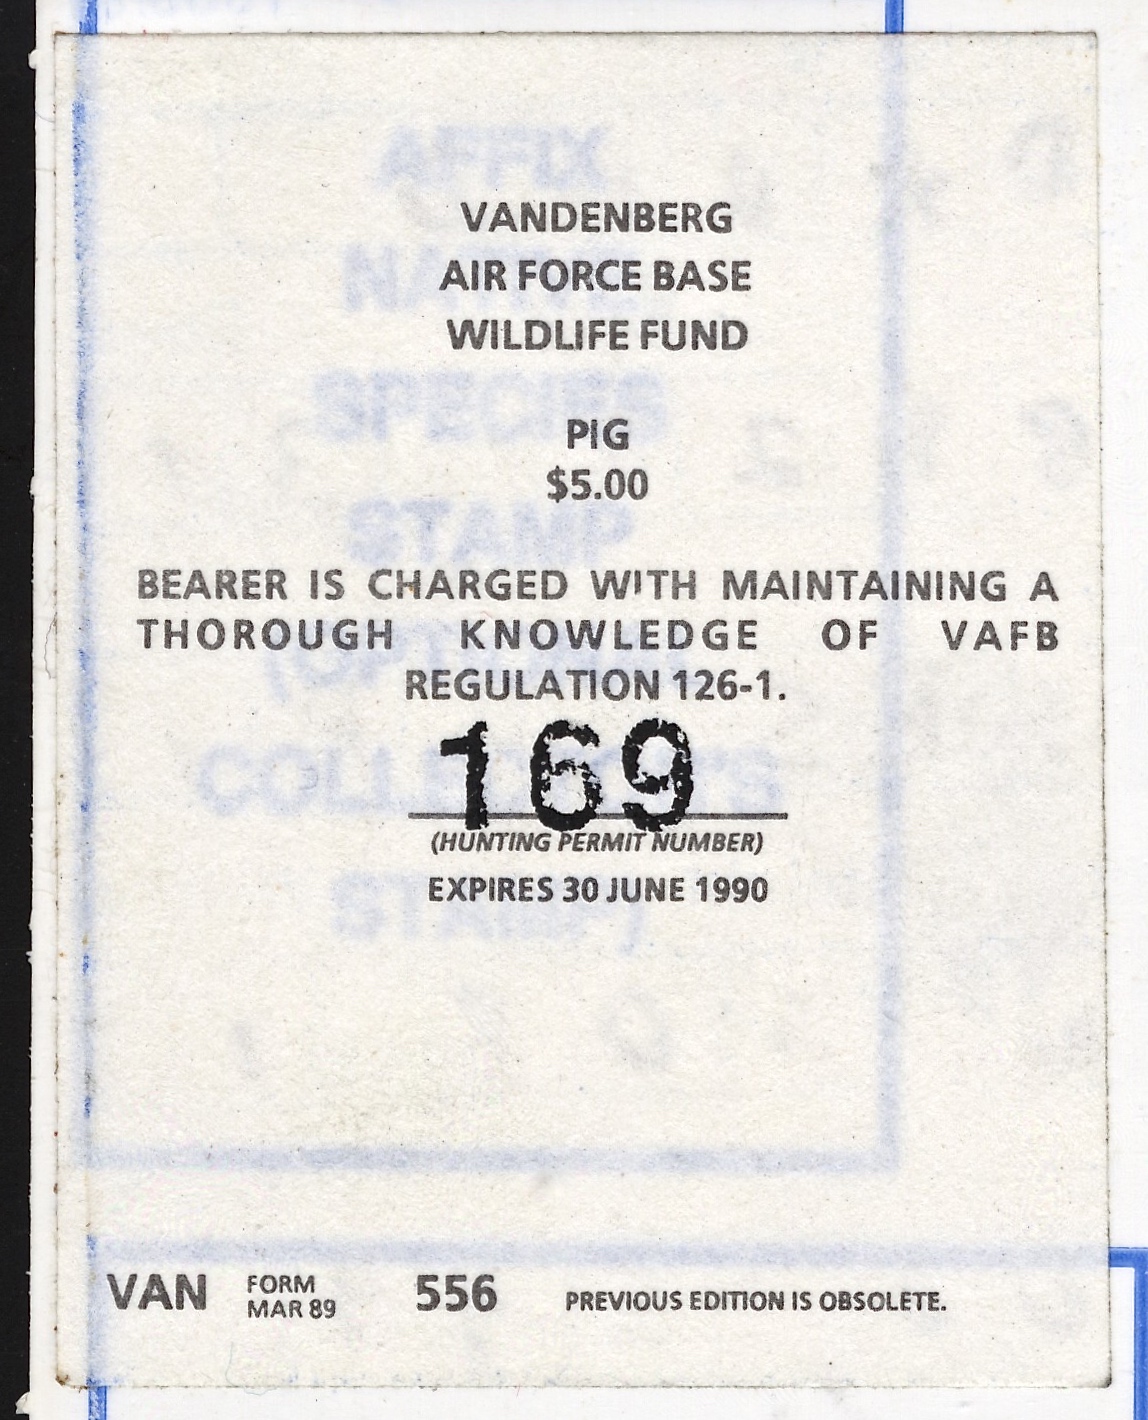 1989-90 VAFB Pig